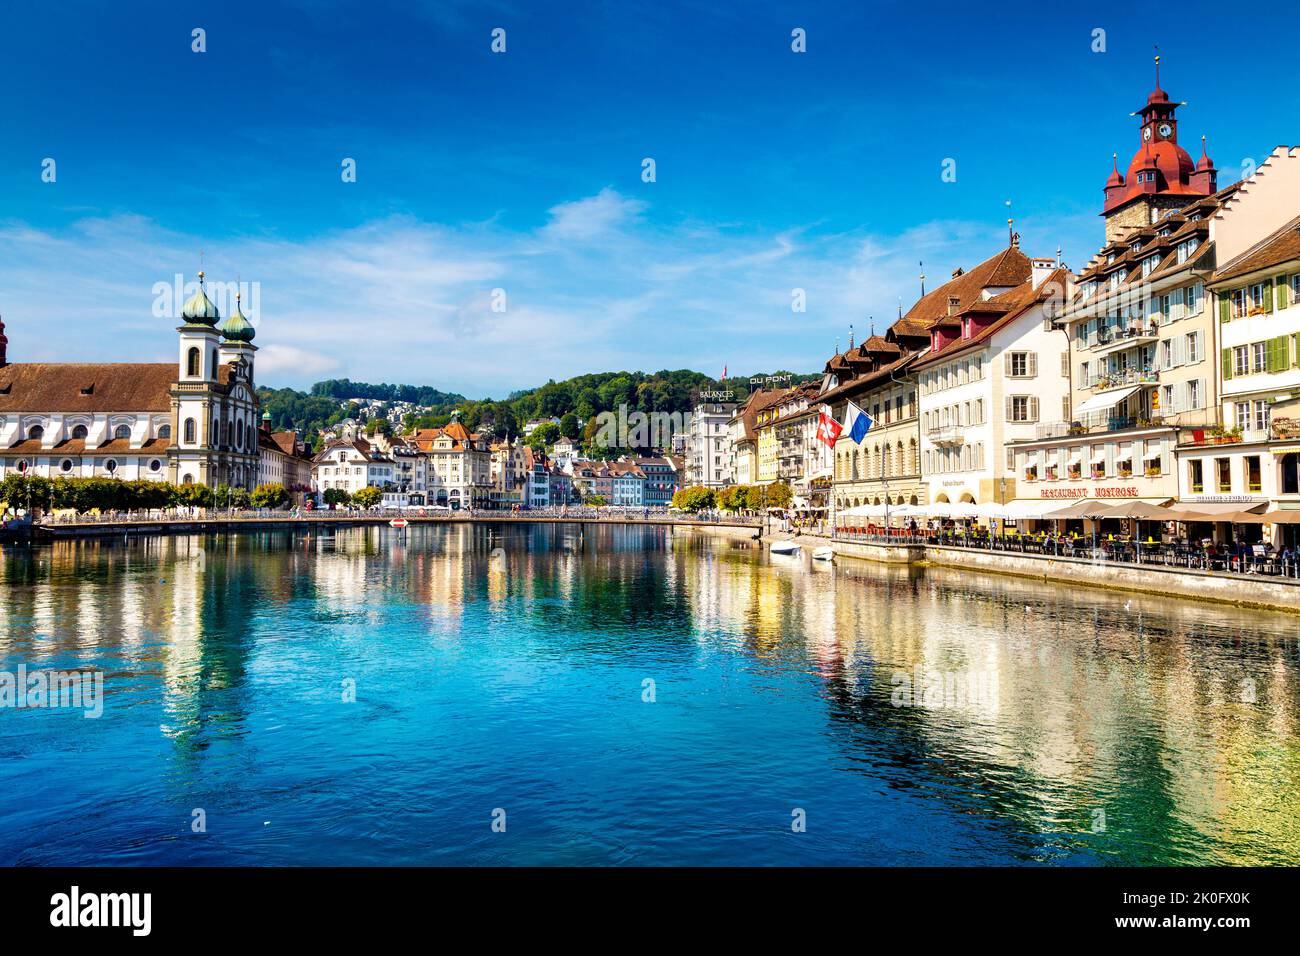 Vista sulla città e sul ponte Rathaussteg sul fiume Reuss, Lucerna, Svizzera Foto Stock